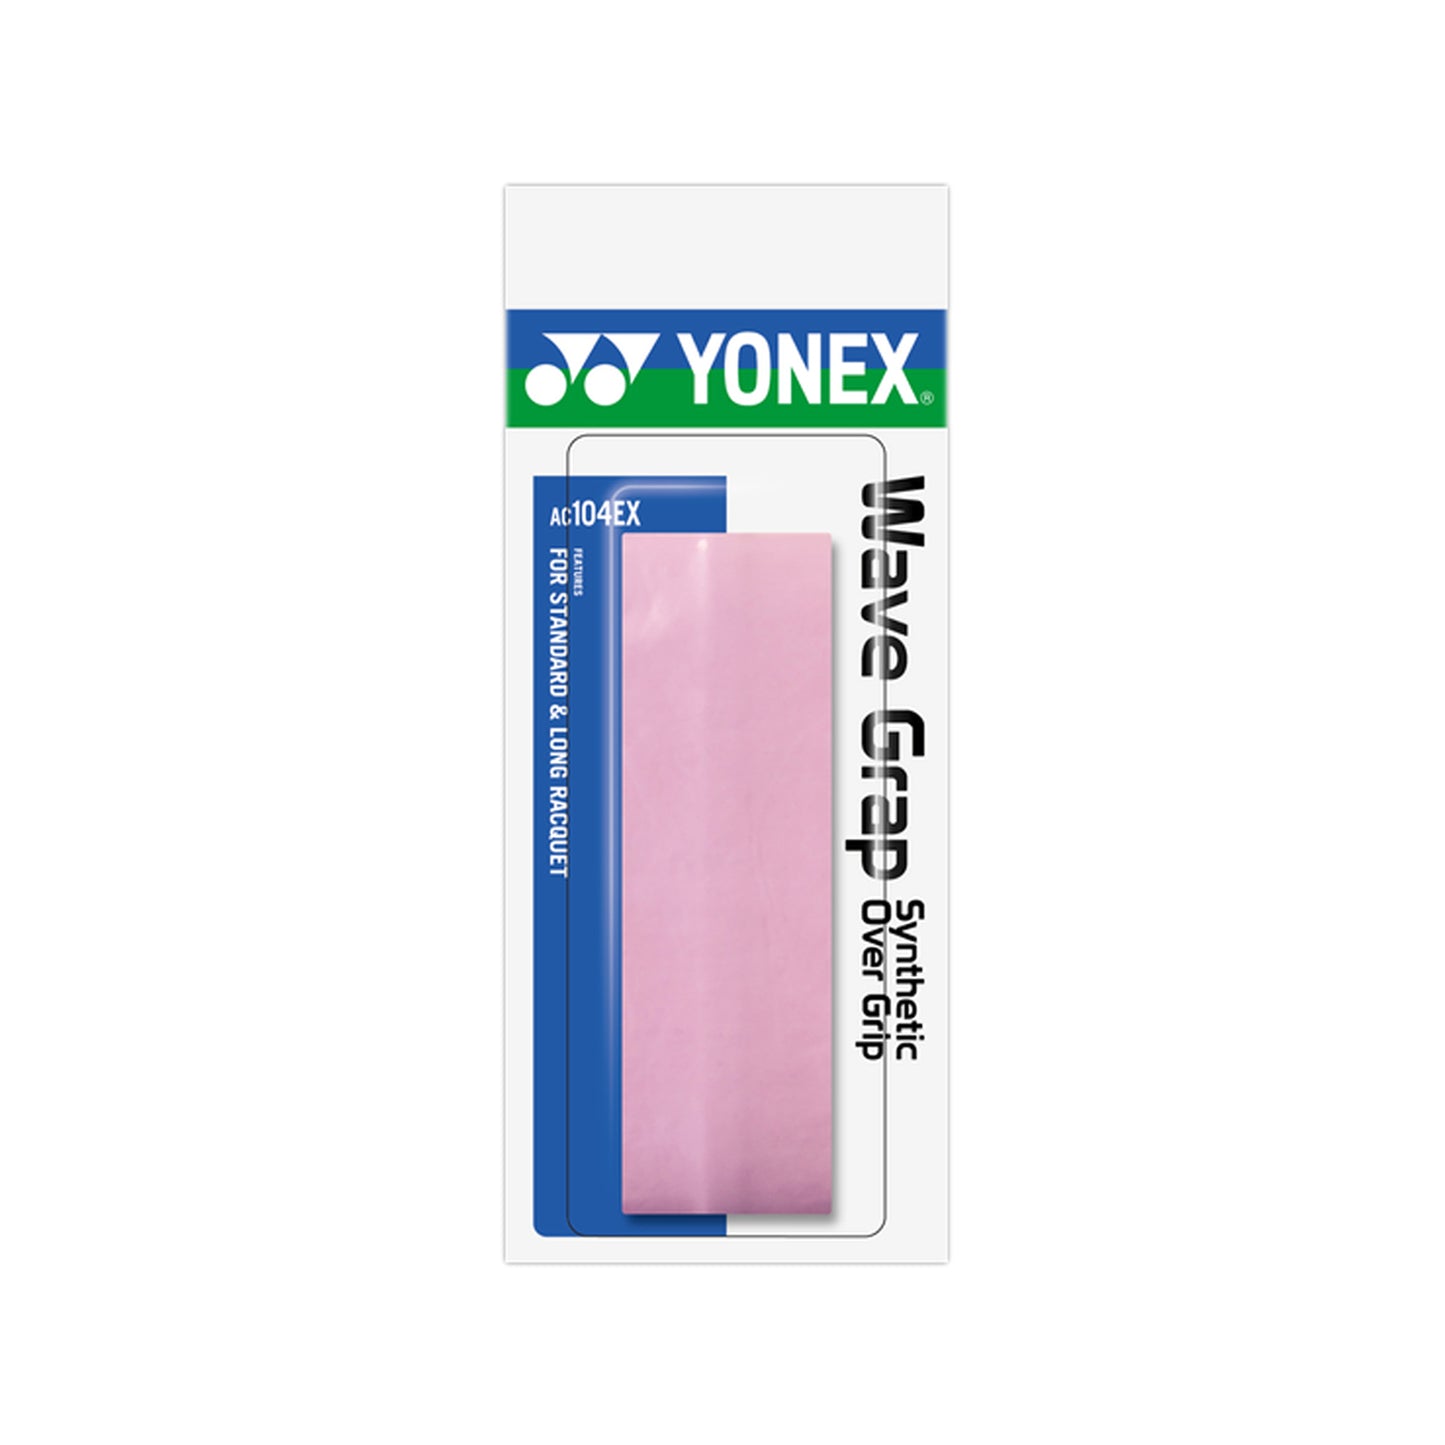 Yonex AC 104 EX Wave Grap Badminton Grip Tape - French Pink (1 Pc) - Best Price online Prokicksports.com